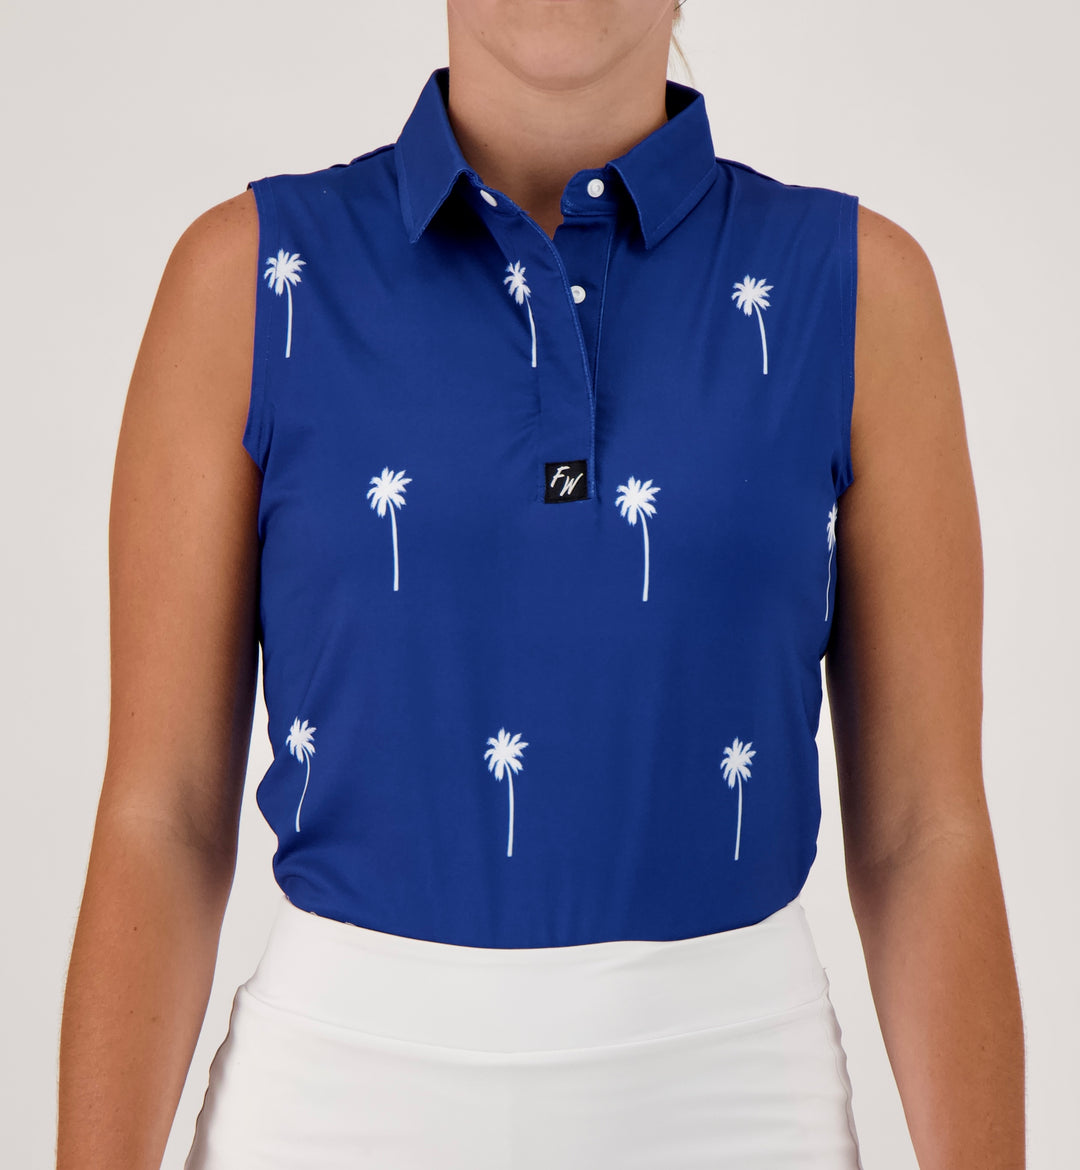 New Golf Clothing Fashion Womens Shirt 2021 Brand Clothes Women Top Polo  Shirts Long Sleeve Tennis Tshirt Dry Fit Ropa De Golf Polera Hombre  Sportswear Femme Apparel